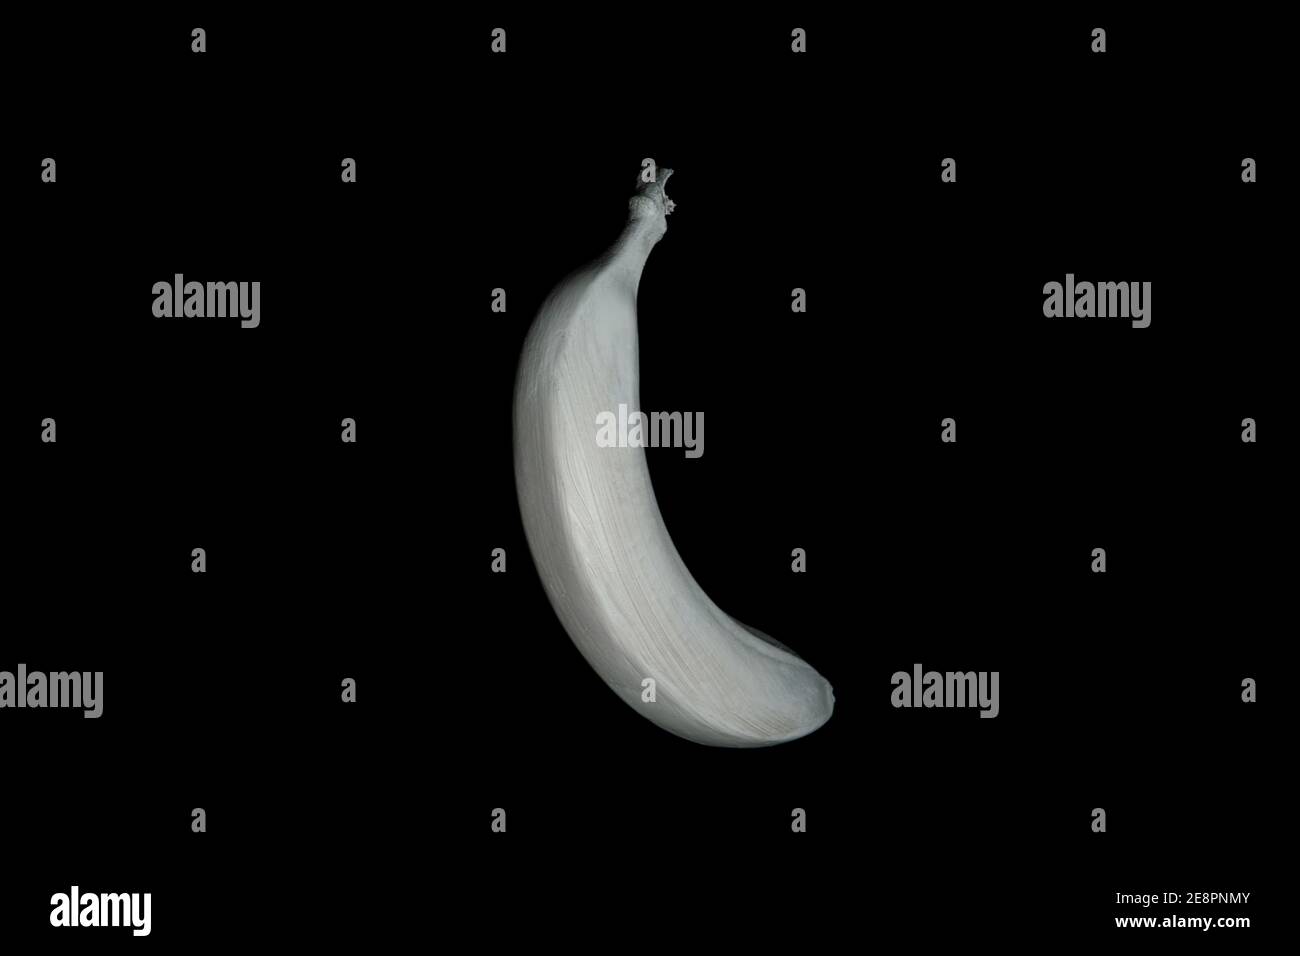 White floating banana on a black background. Creative fruit concept Stock Photo